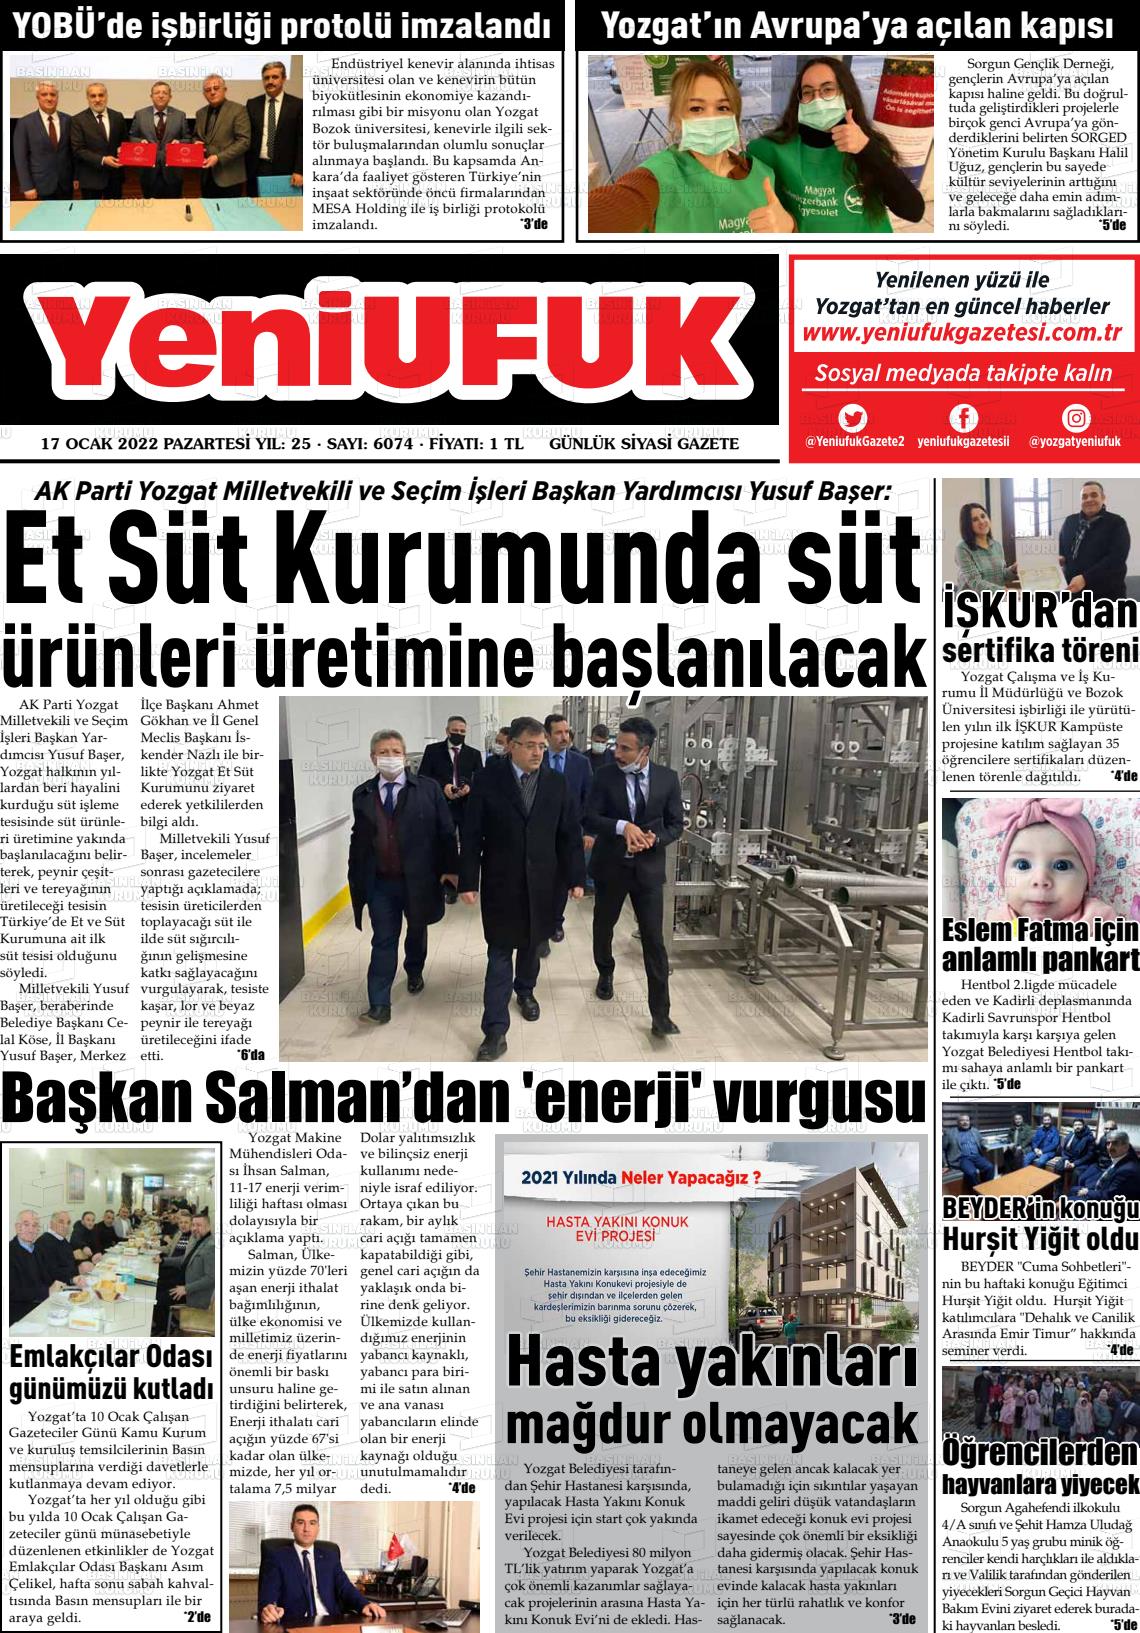 17 Ocak 2022 Yozgat Yeni Ufuk Gazete Manşeti